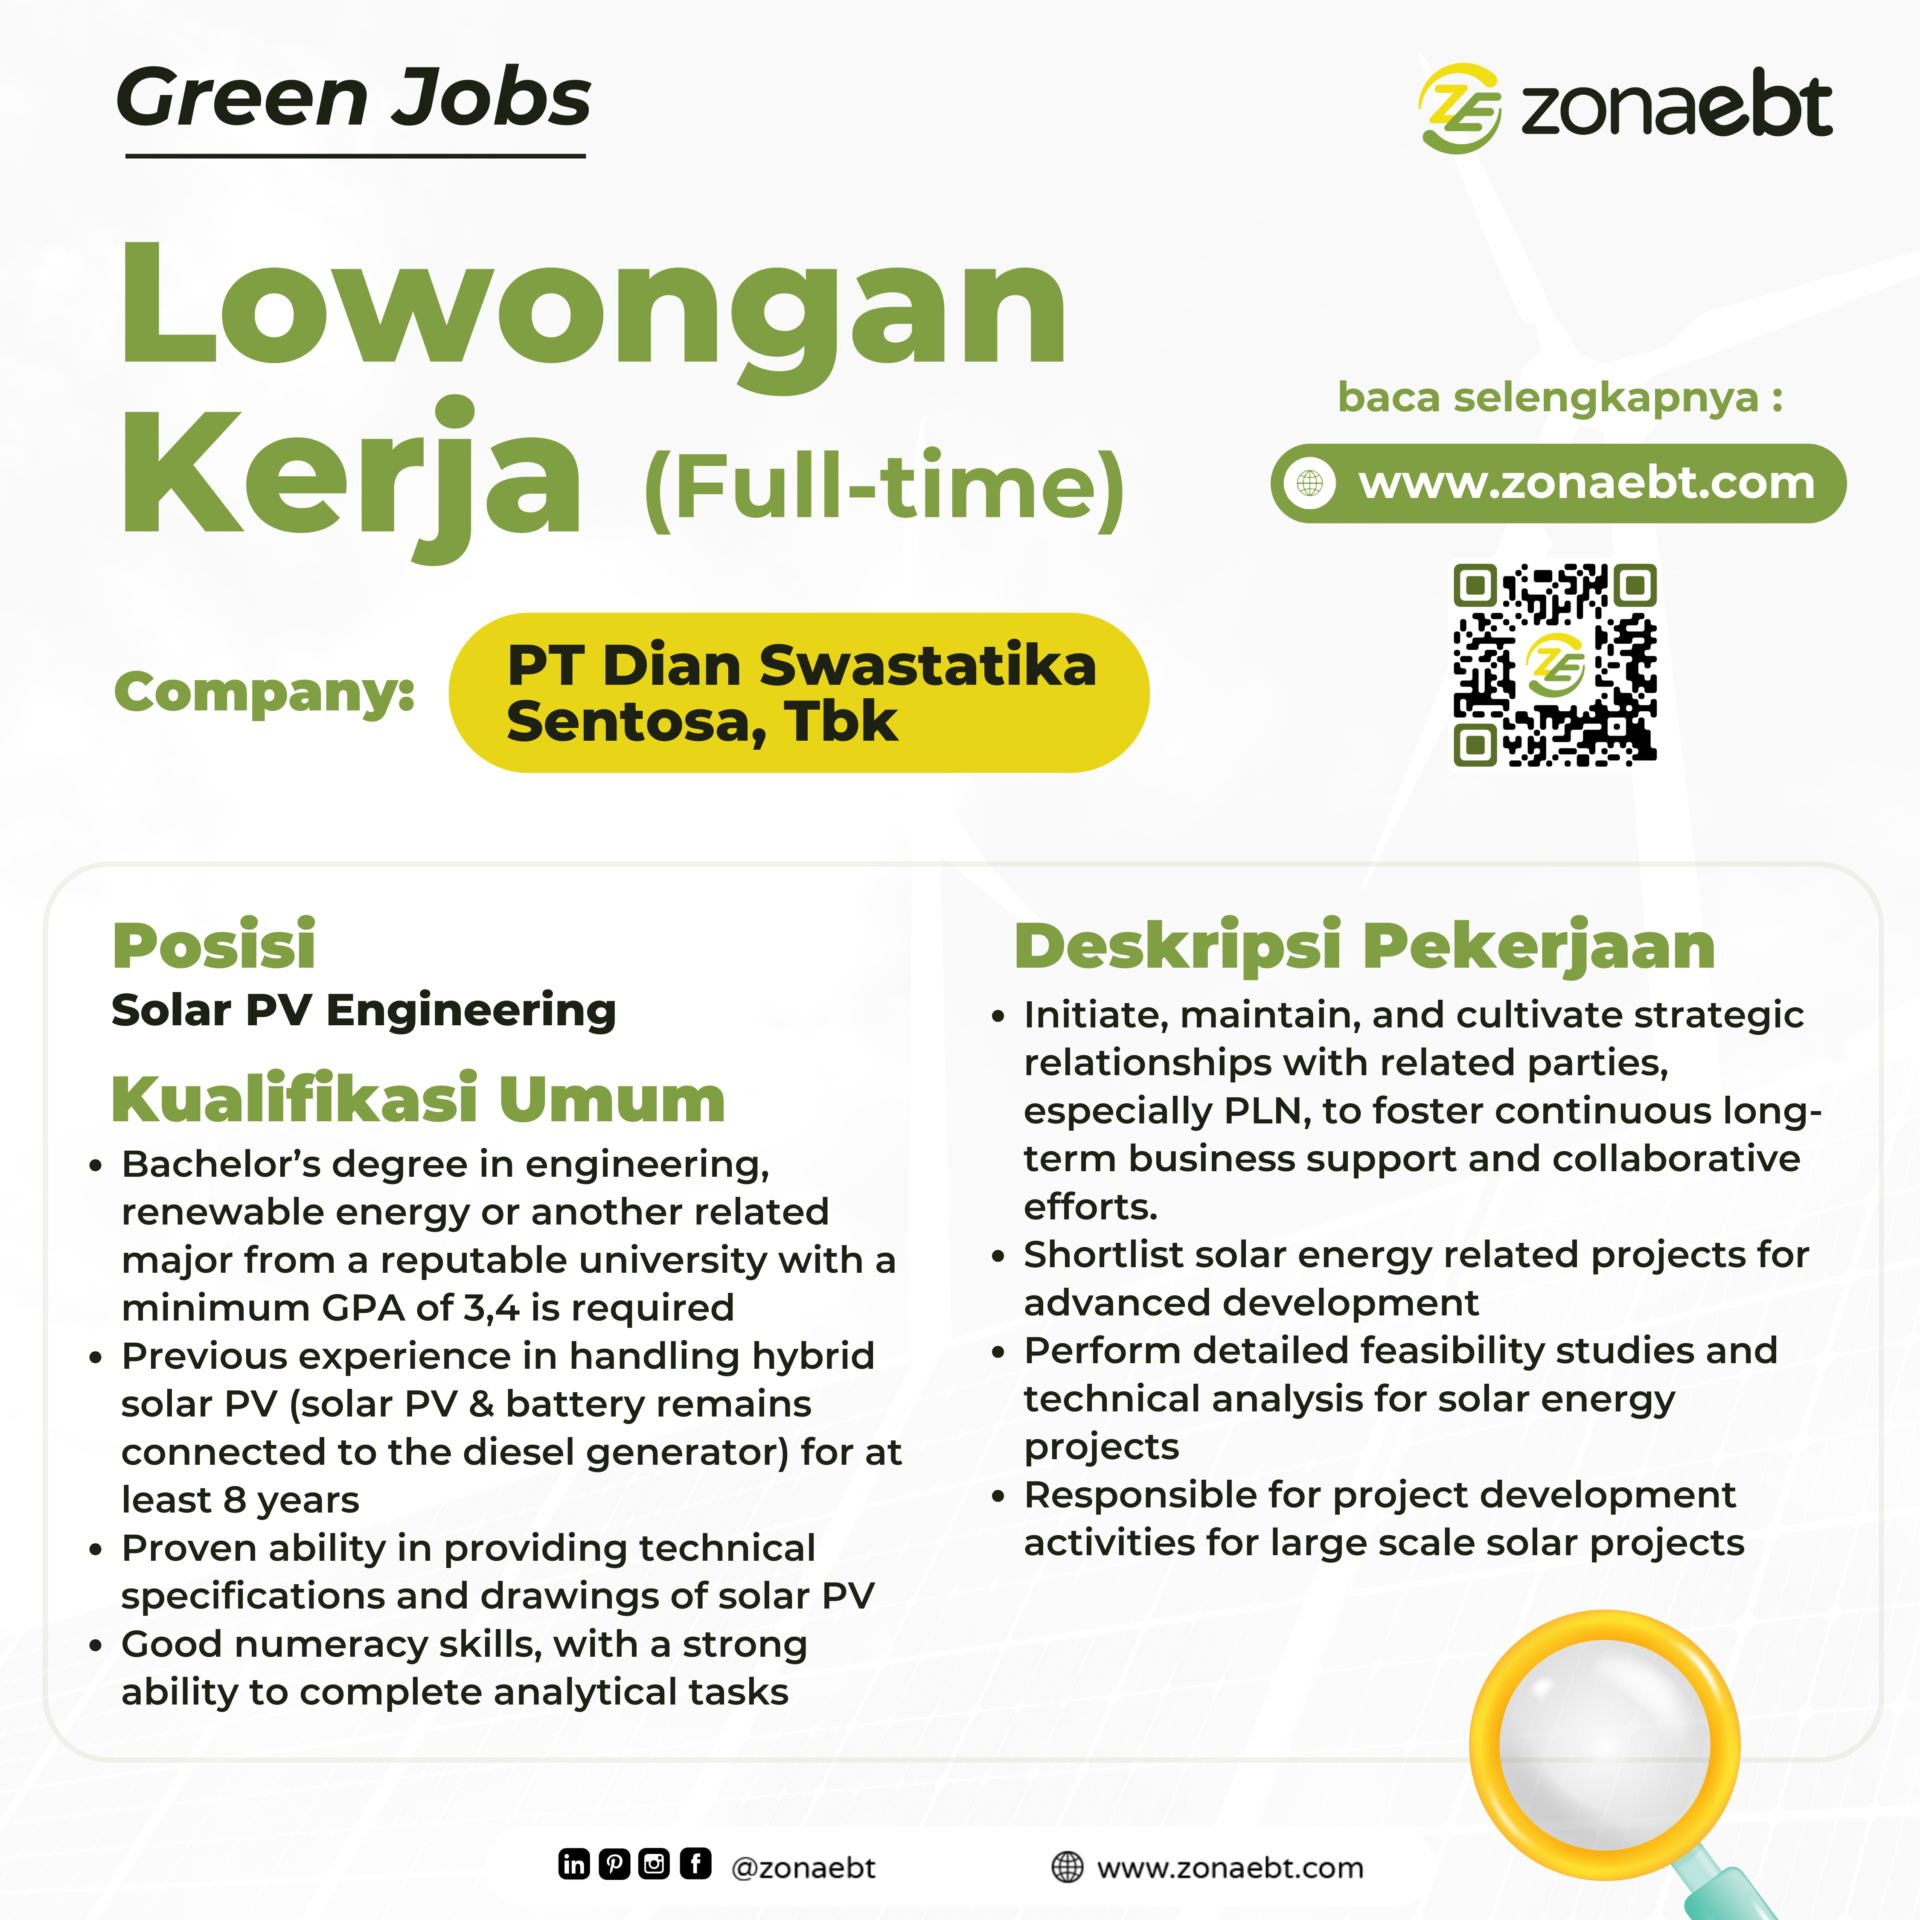 Post Solar PV Engineering Green jobs zonaebt.com